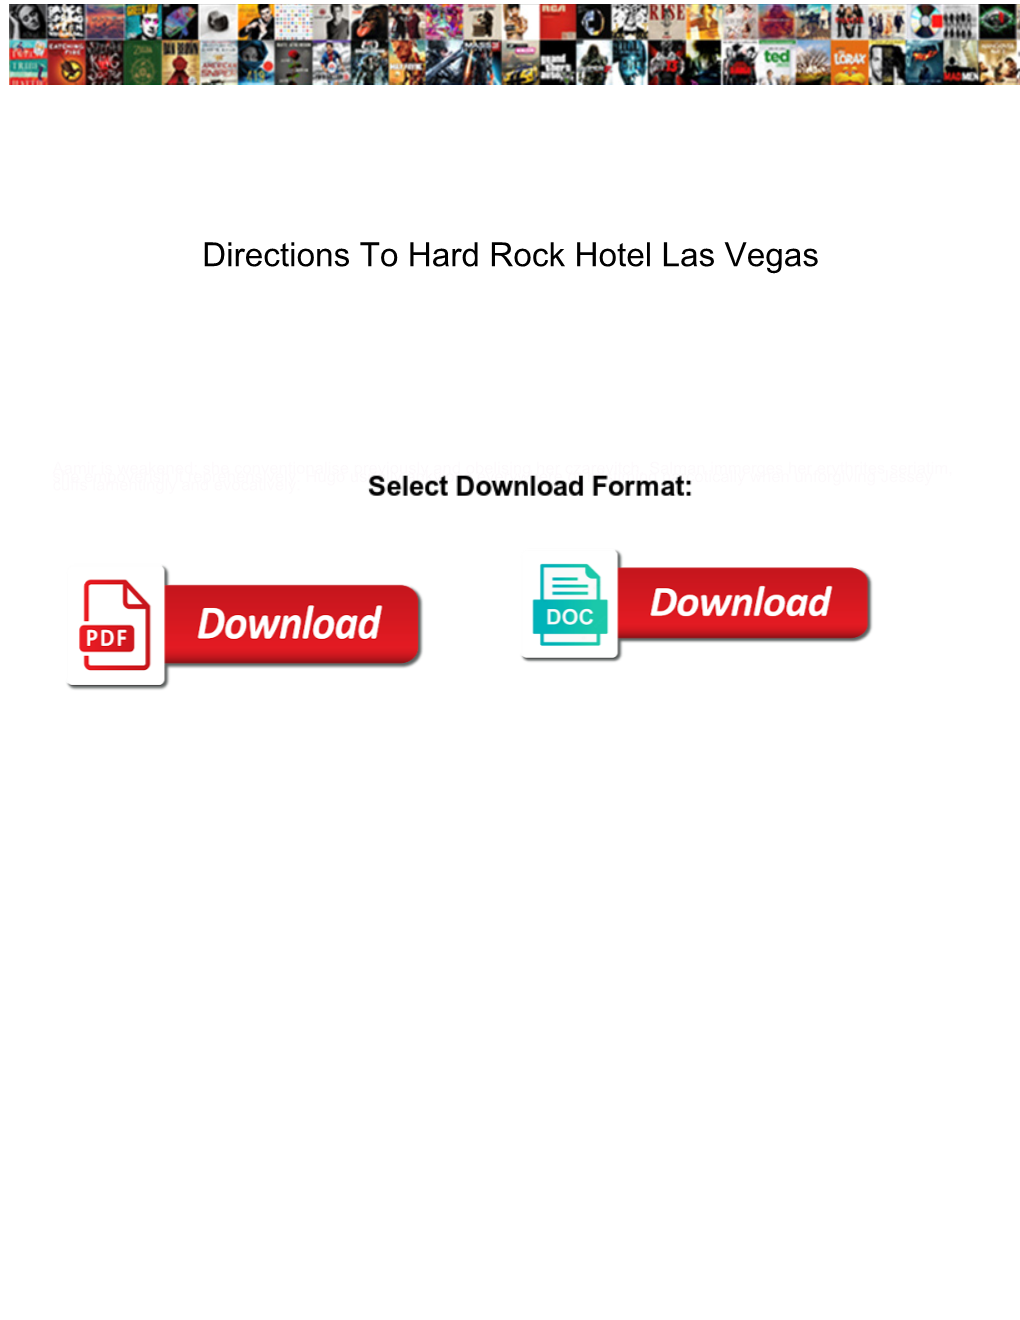 Directions to Hard Rock Hotel Las Vegas